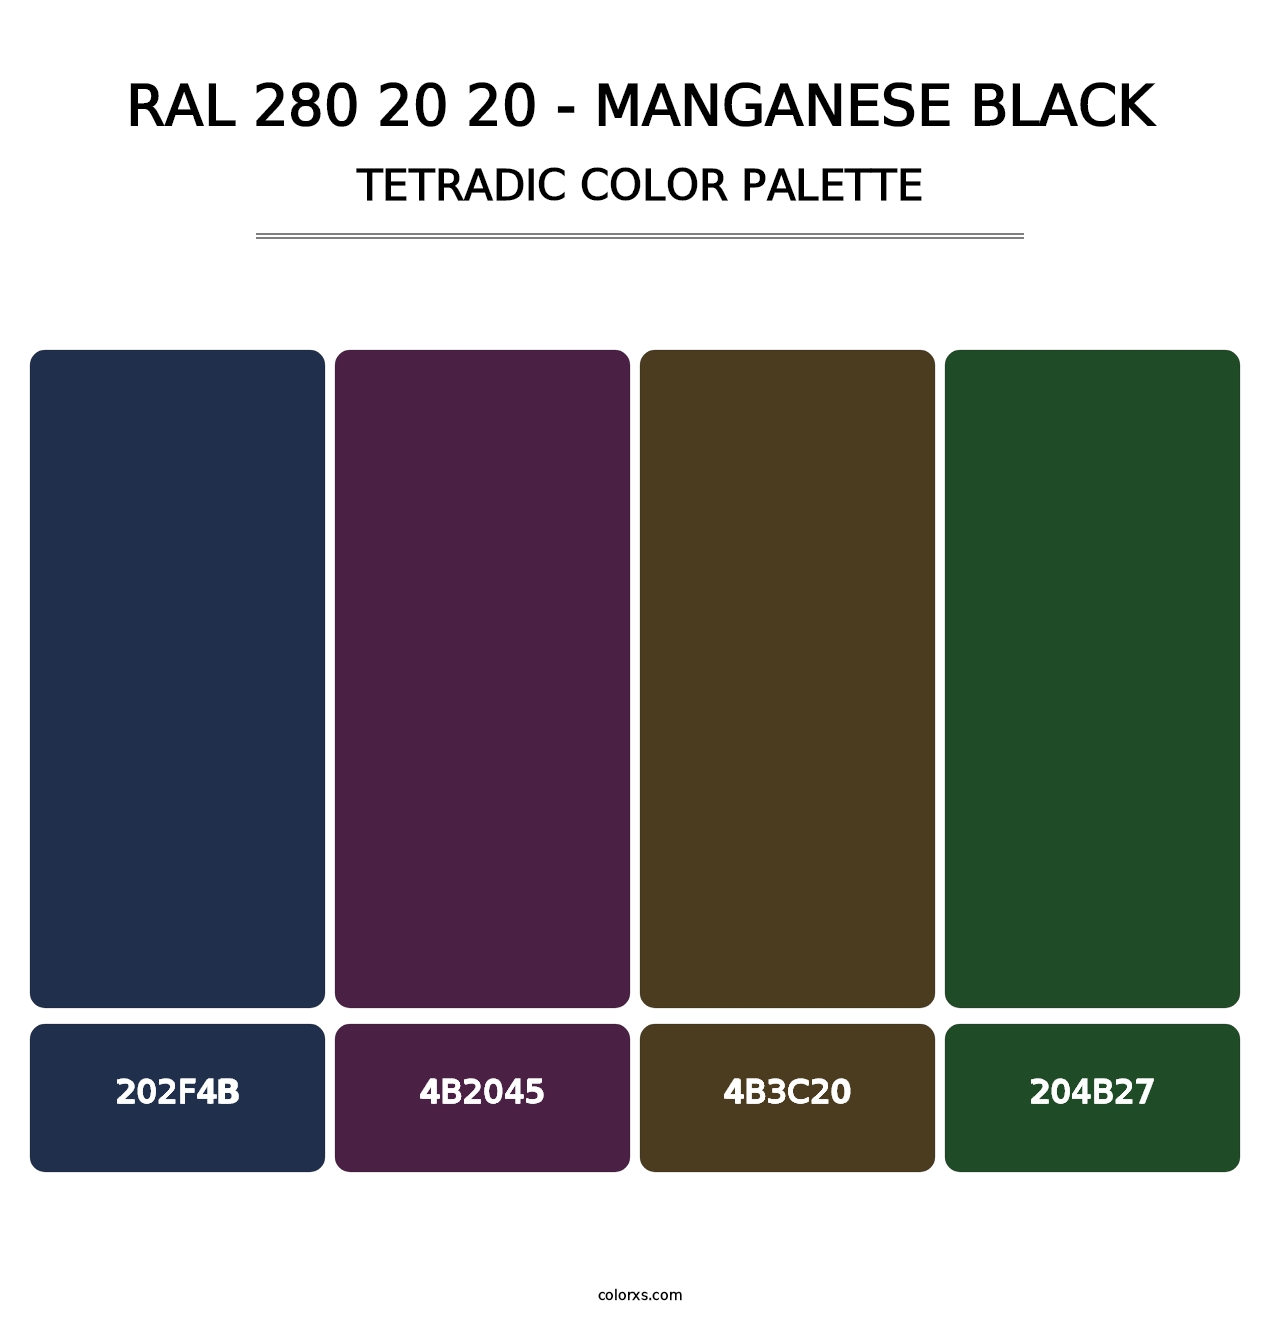 RAL 280 20 20 - Manganese Black - Tetradic Color Palette